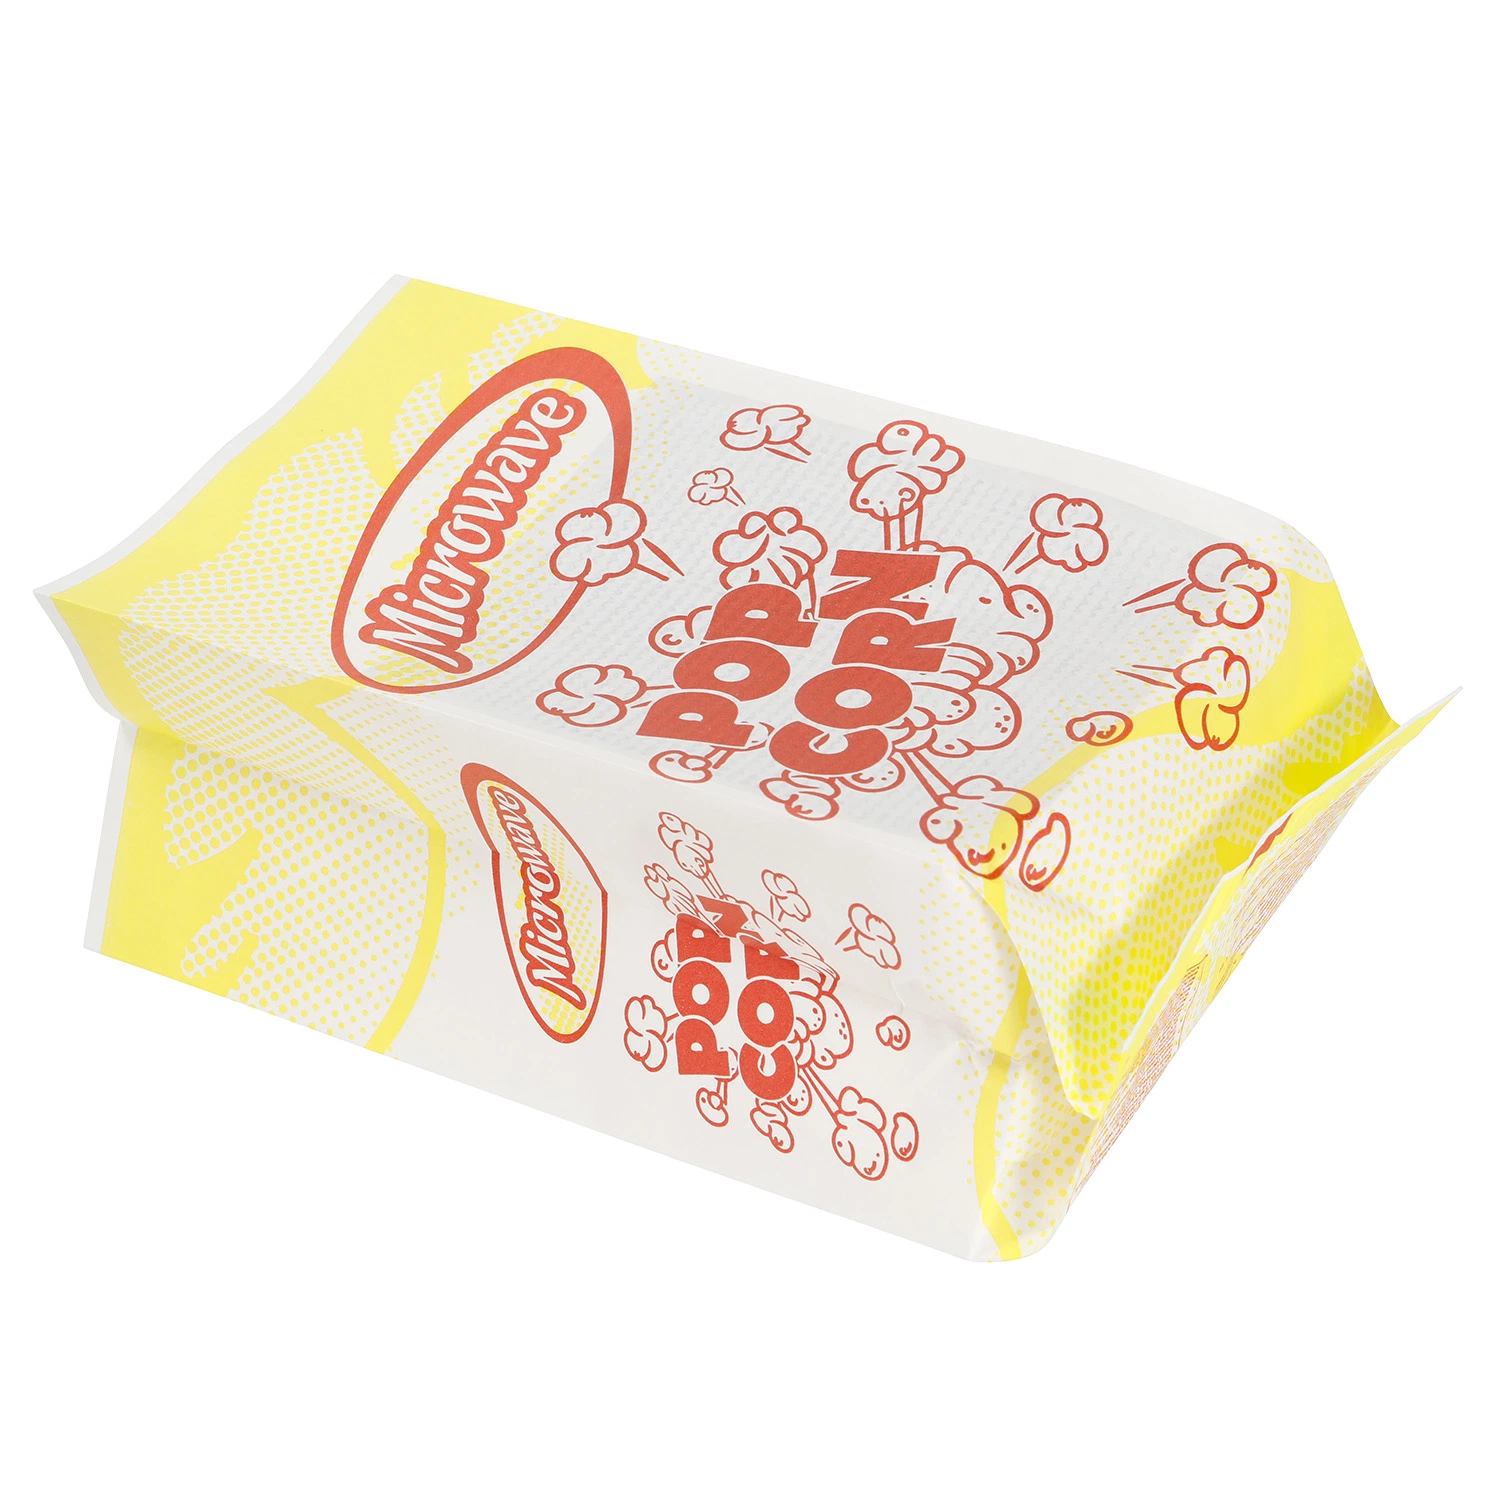 Wholesale Folding Security Seal Custom Food Gradepaper with Reflective Film Biodegradable Microwave Popcorn Paper Bag